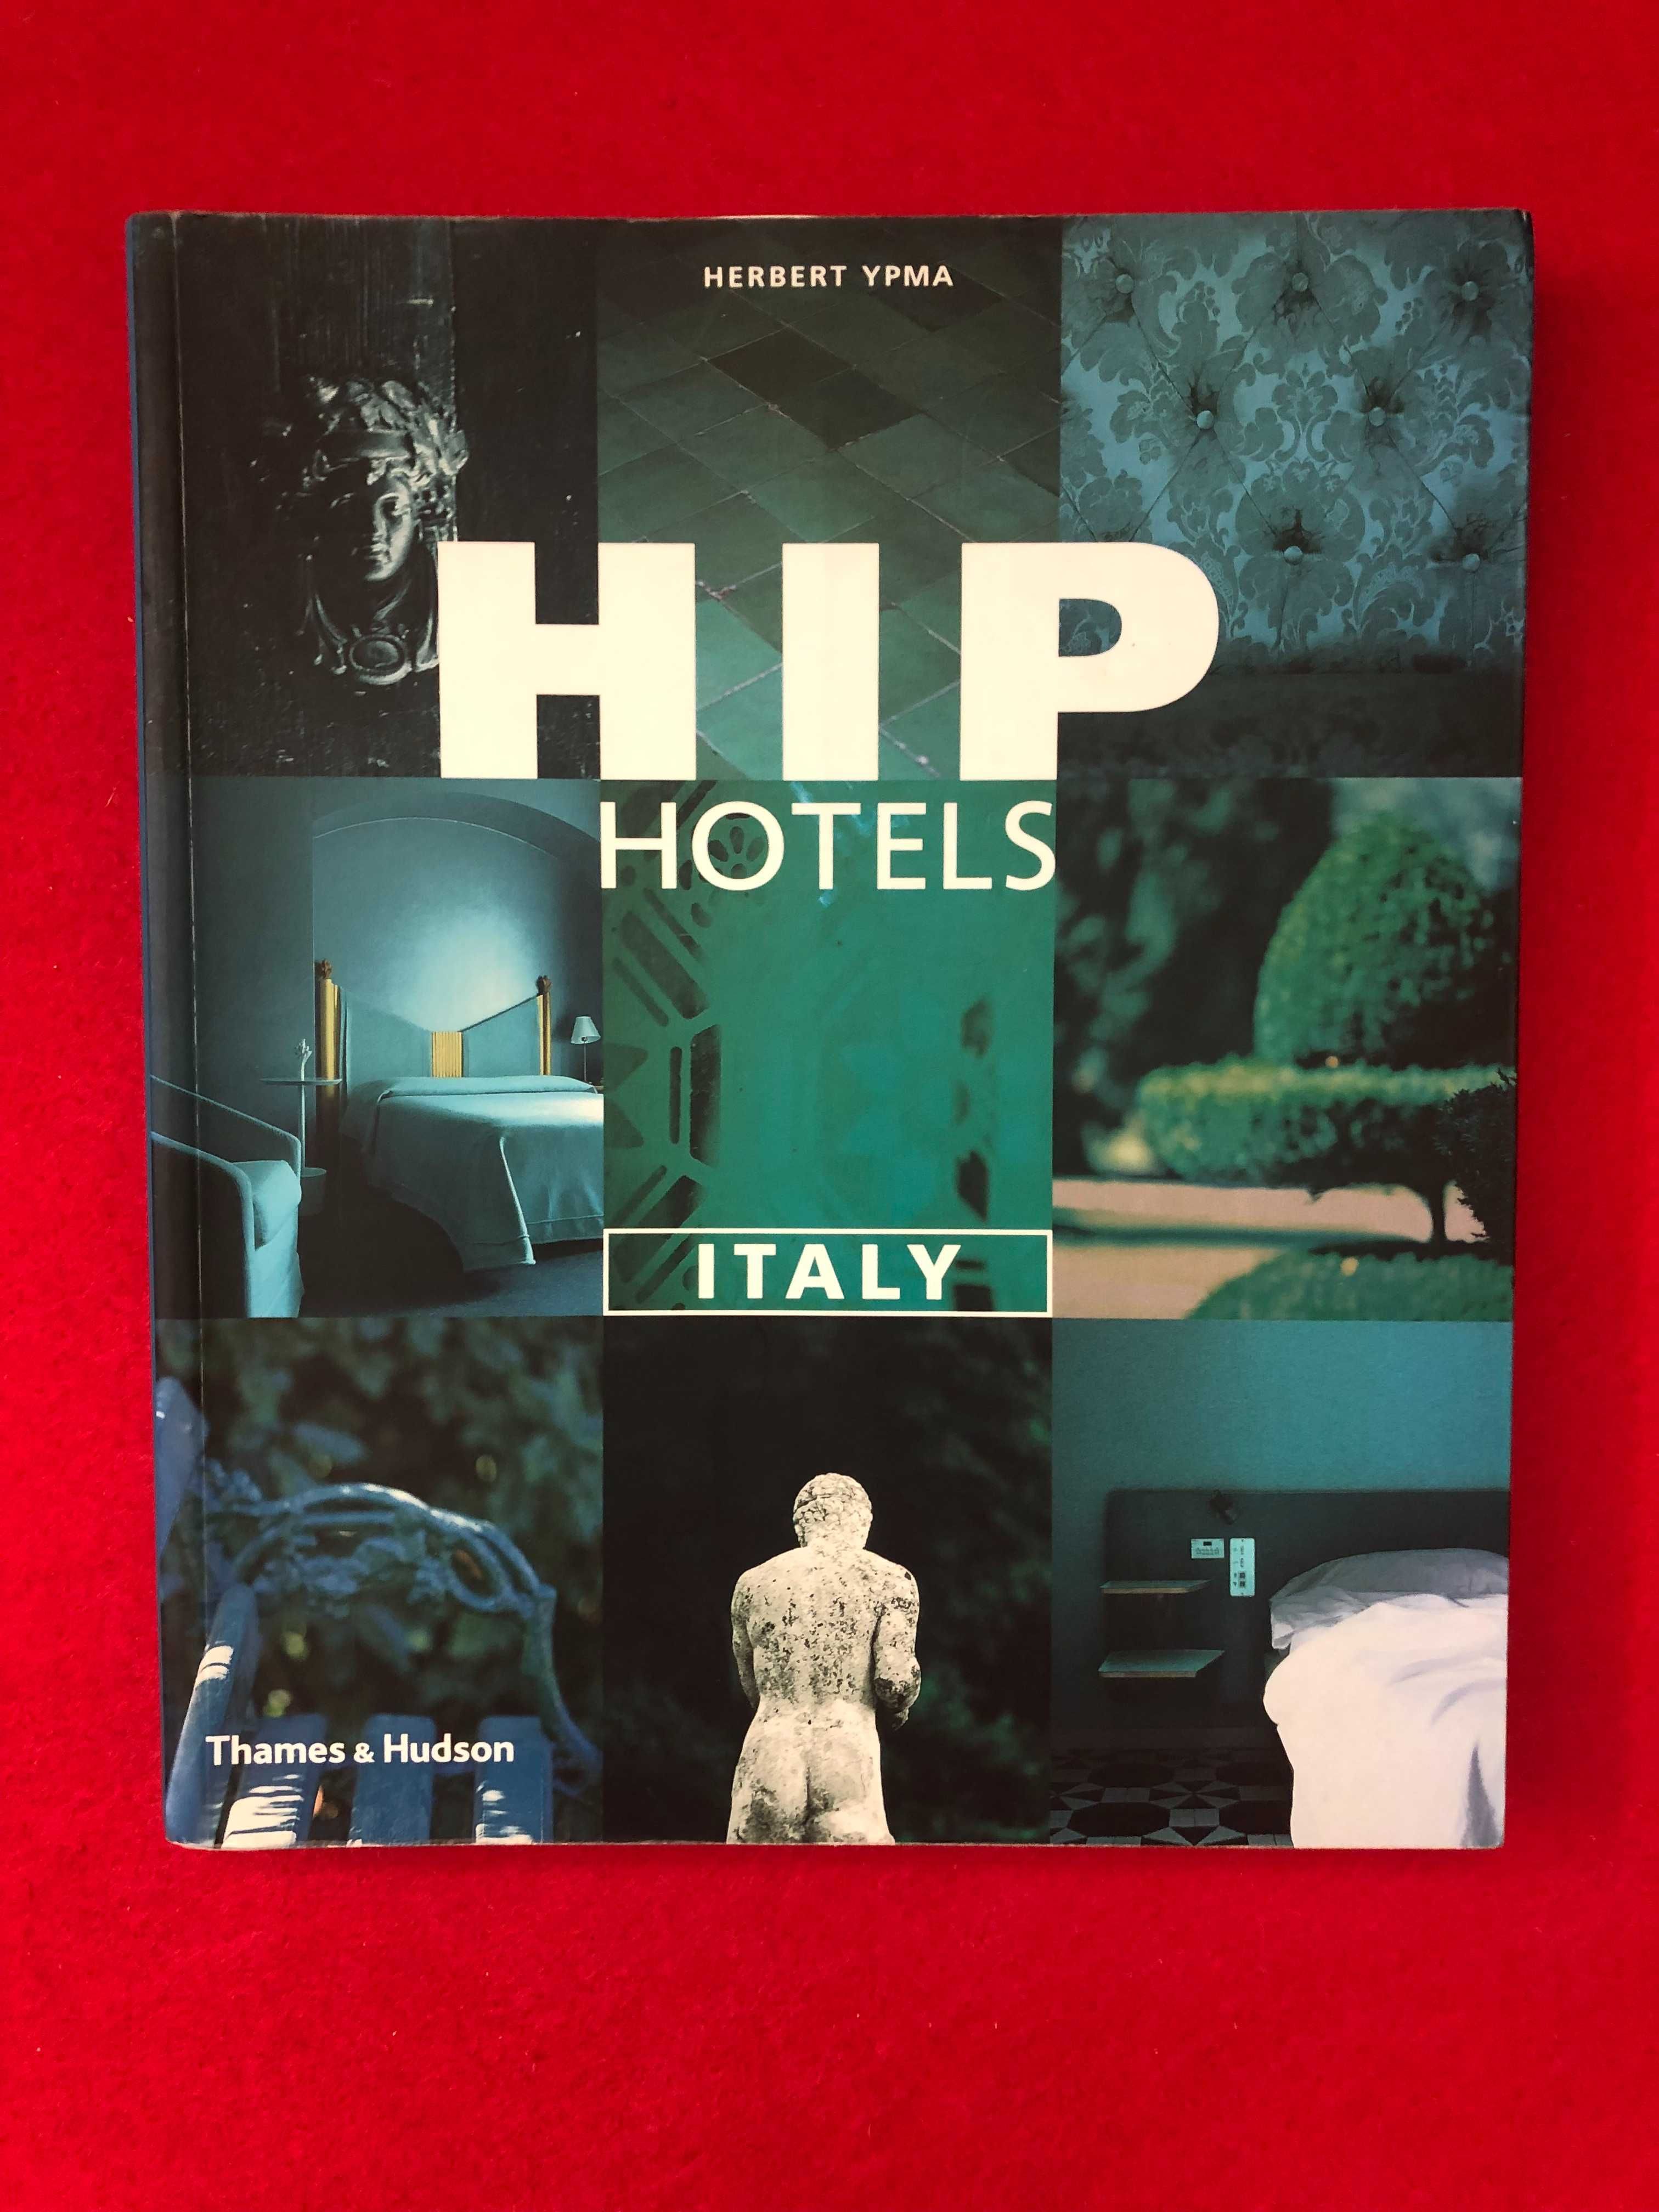 Hip hotels Italy - Herbert Ypma